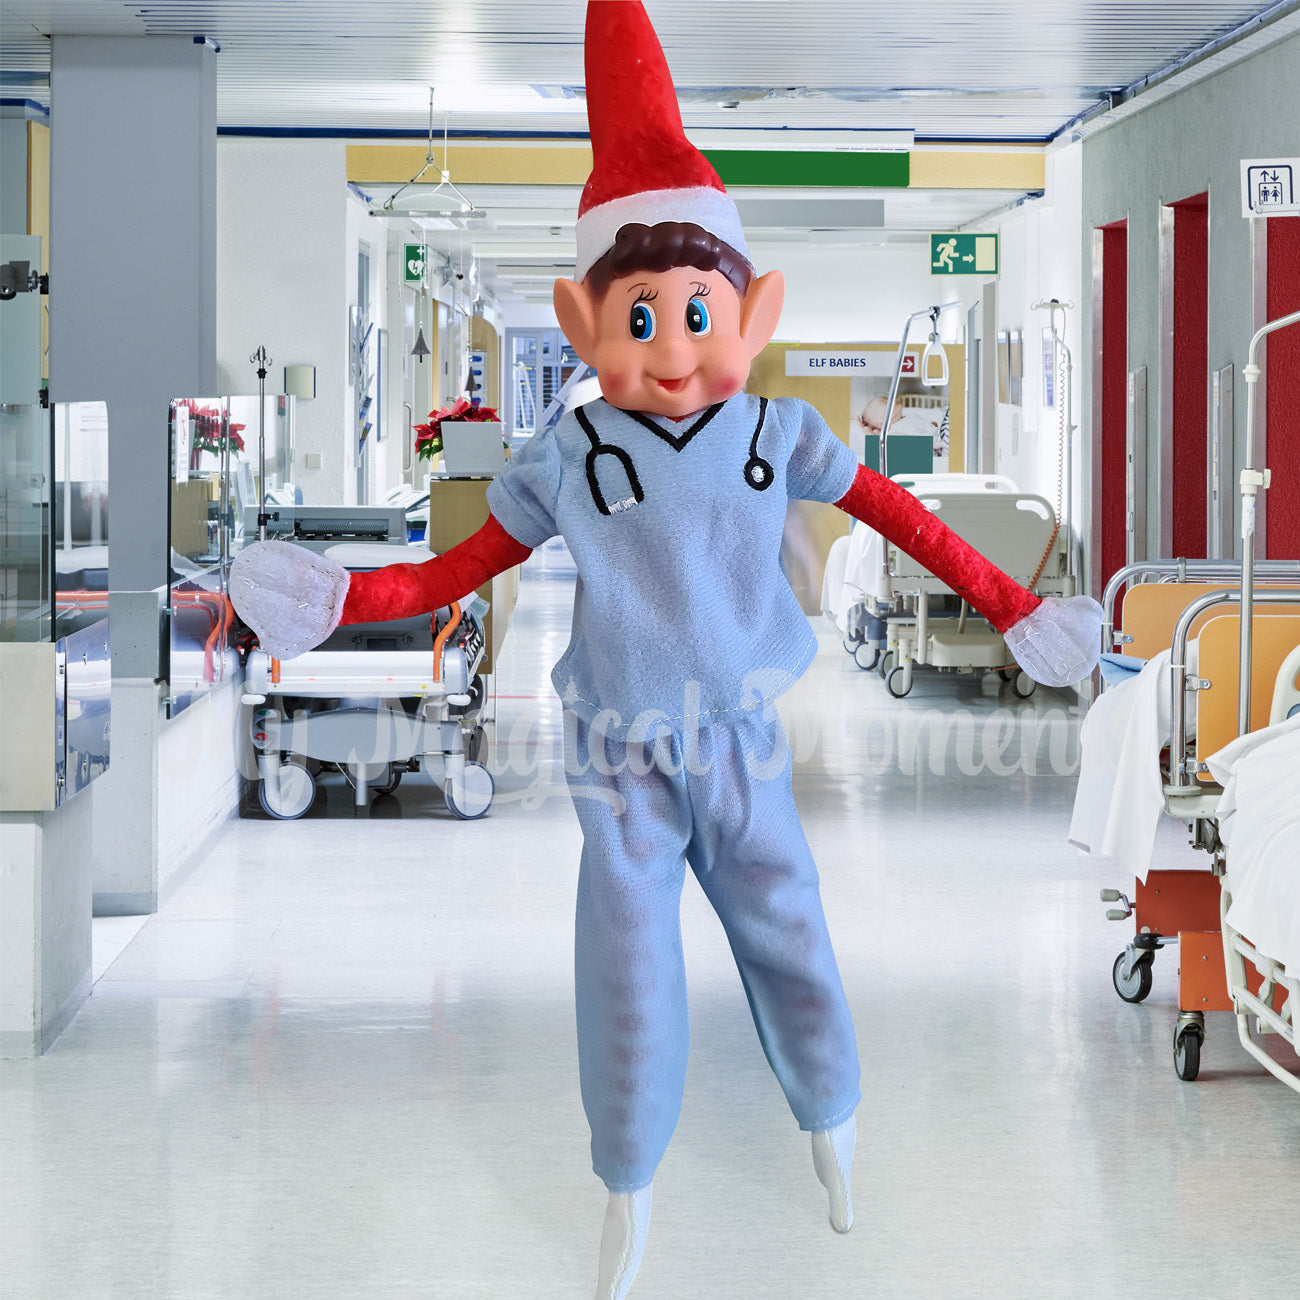 Elves behavin badly dressed as a nurse in a hospital ward